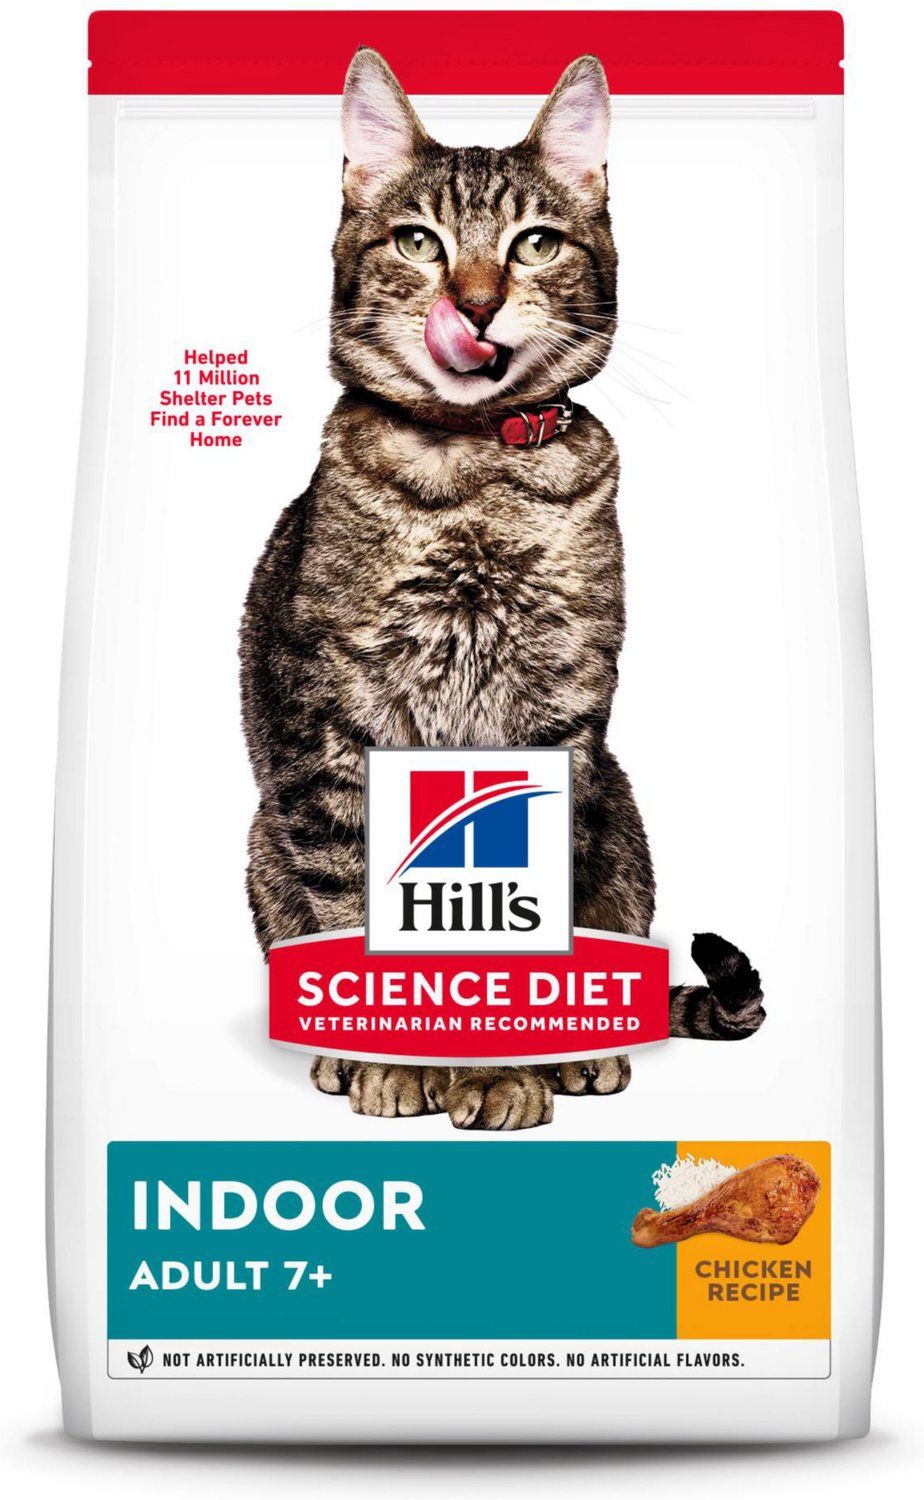 Hill's Science Diet Adult 7+ Indoor Dry Cat Food, 15.5lb bag